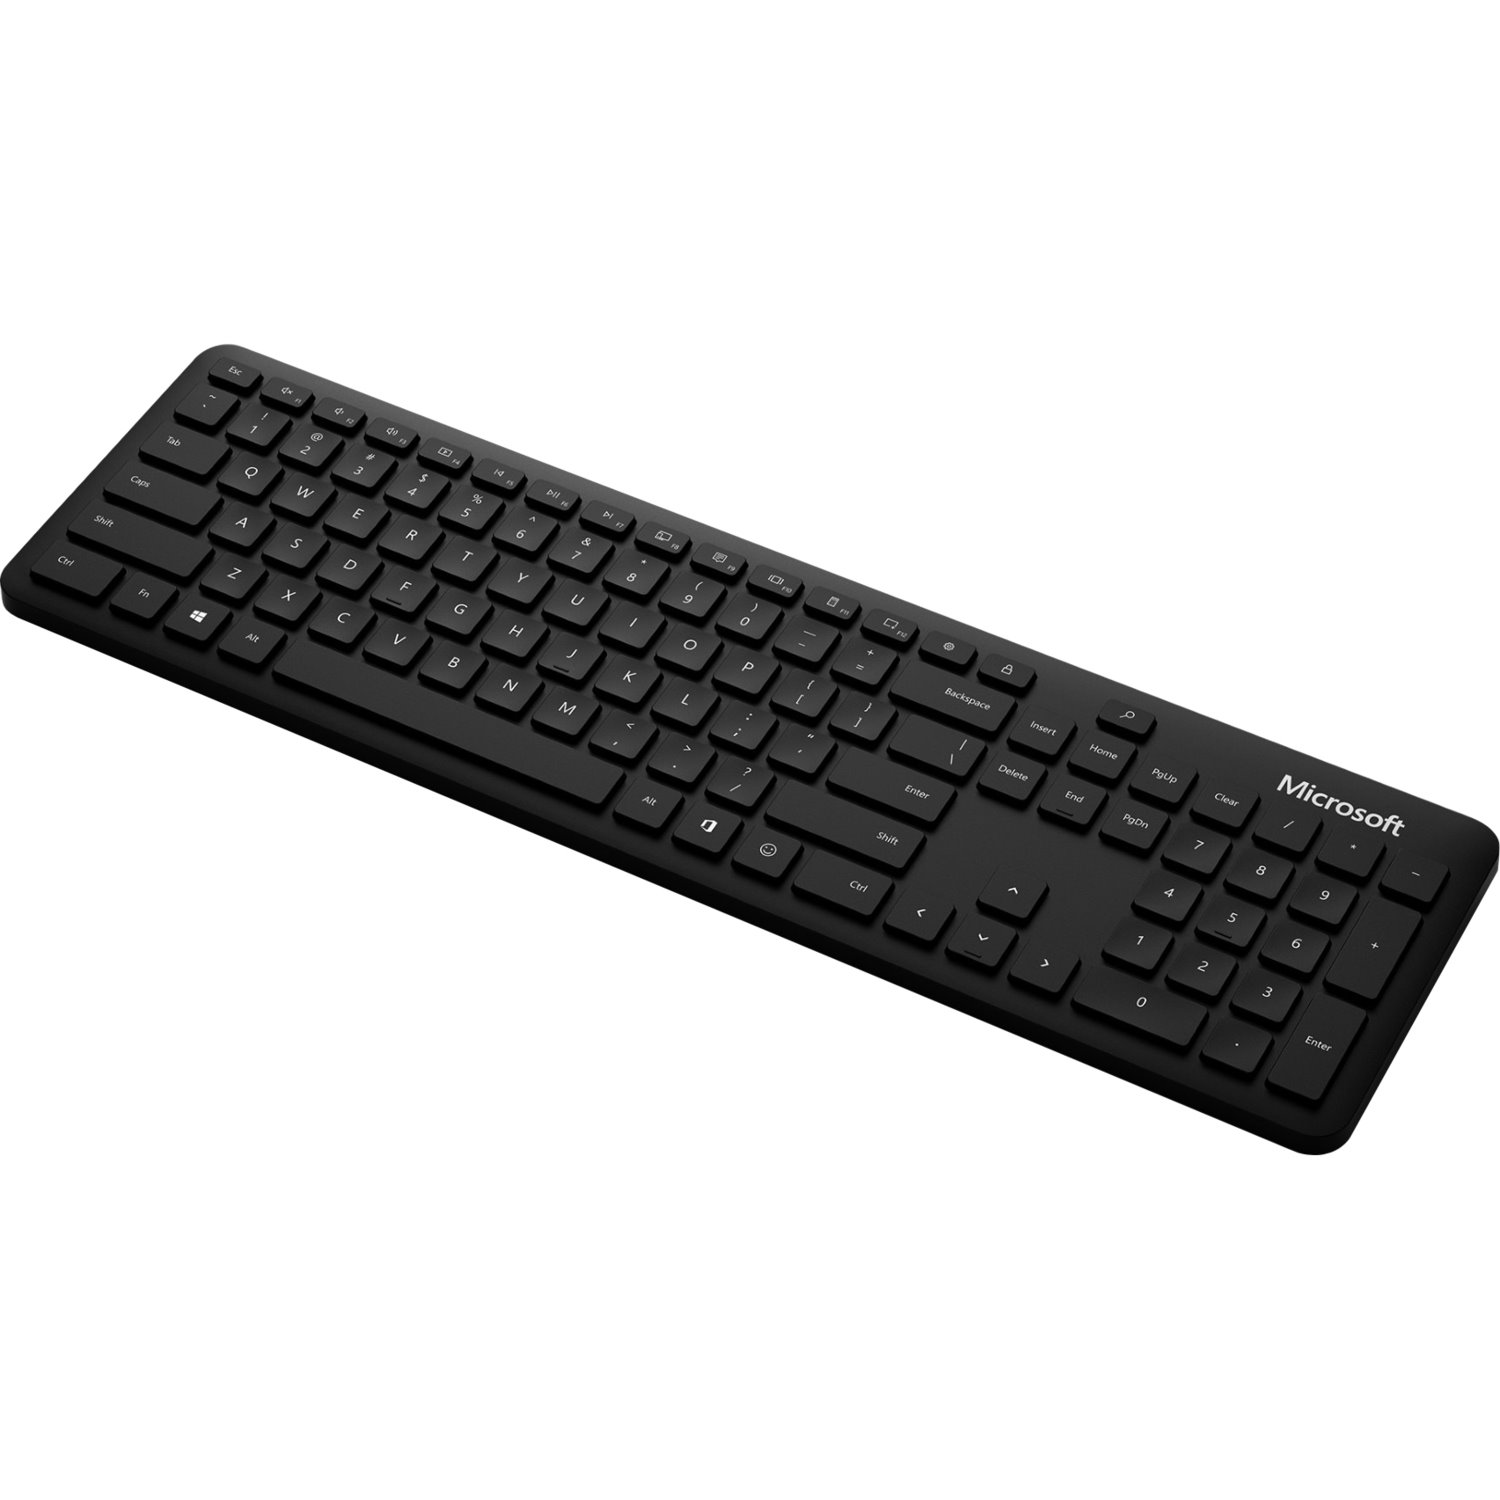 Microsoft Keyboard - Wireless Connectivity - Black